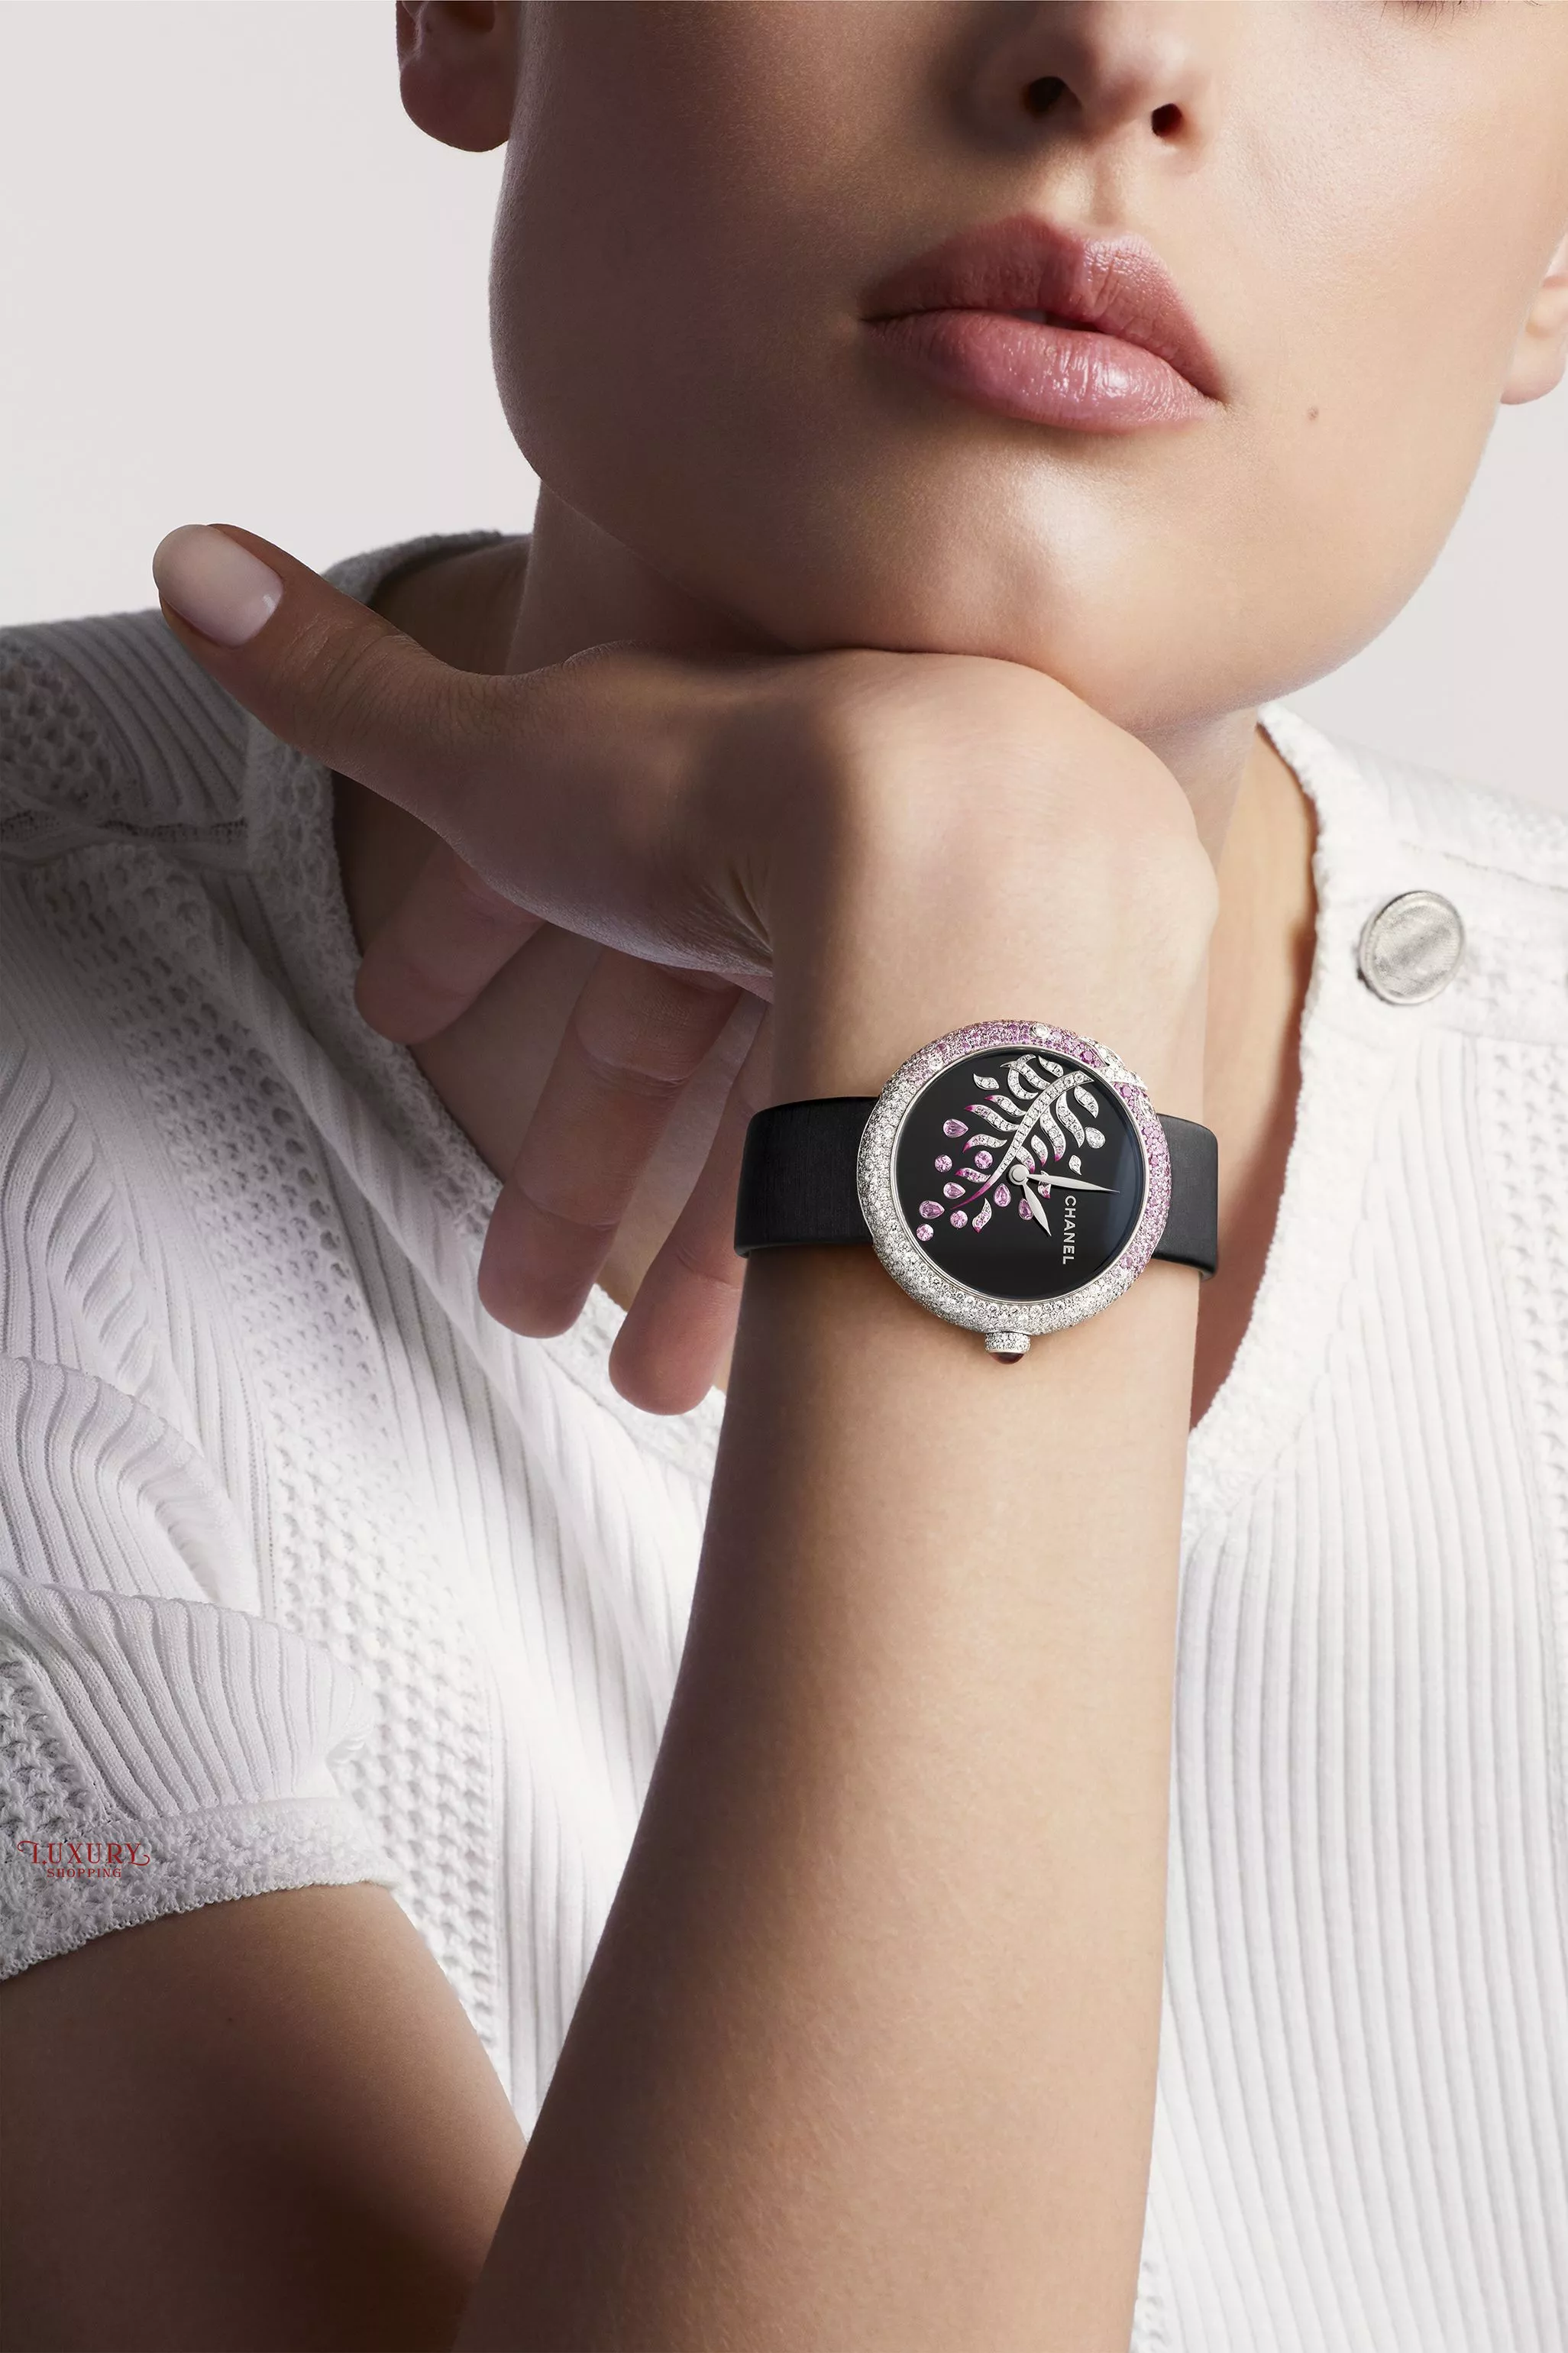 Chanel Mademoiselle Prive Diamond Watch 37.5mm